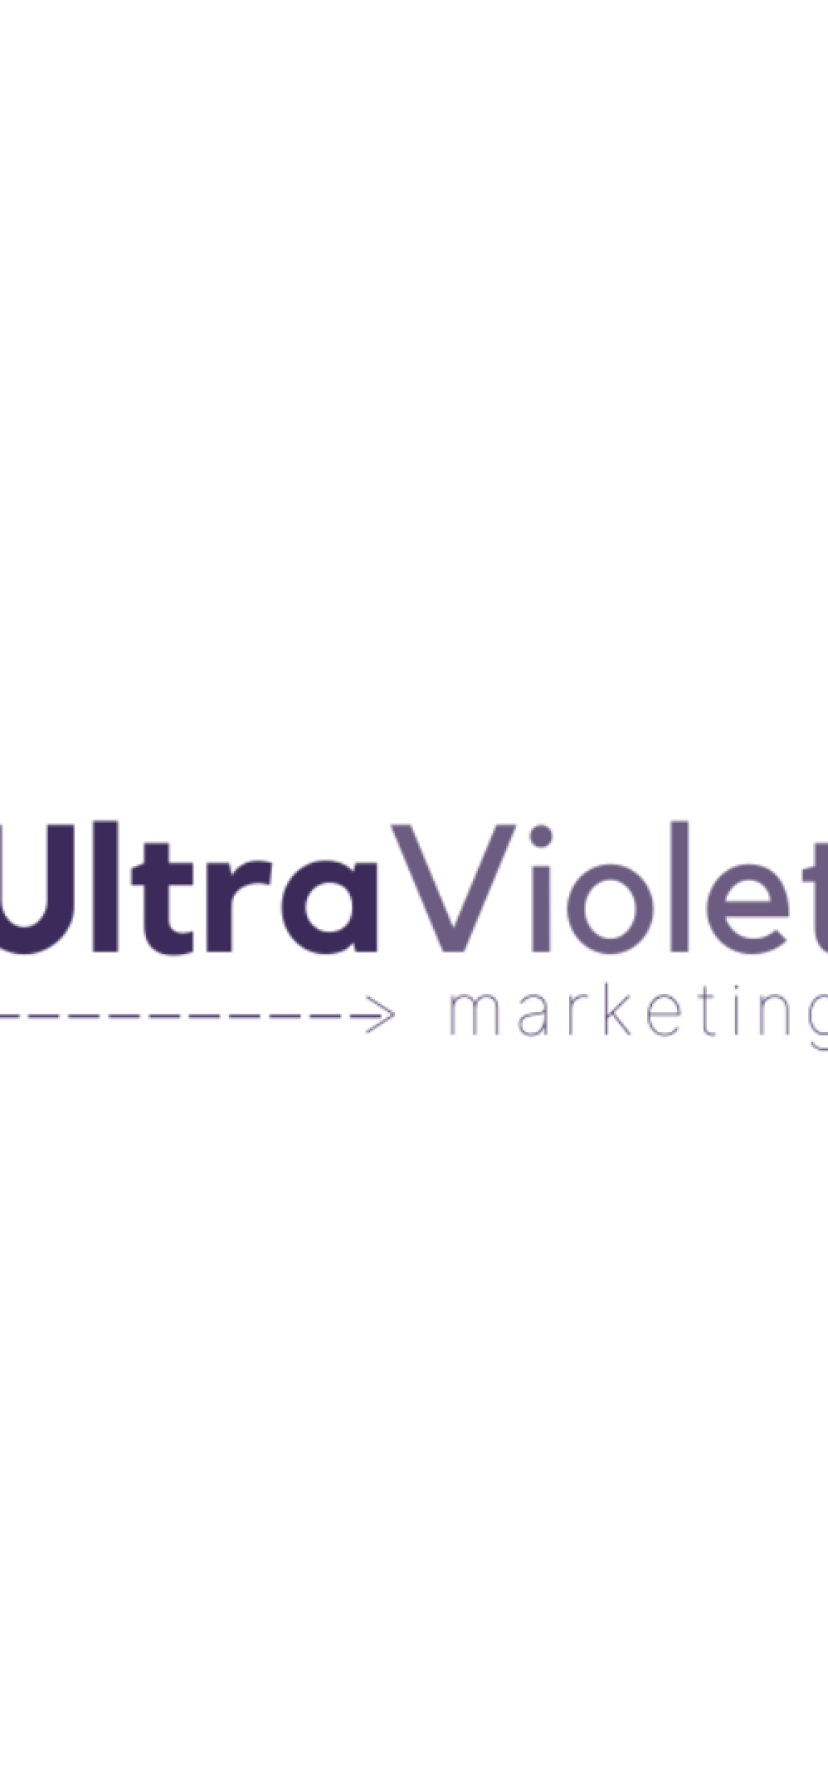 ultravioletmarketing.com domain name is for sale